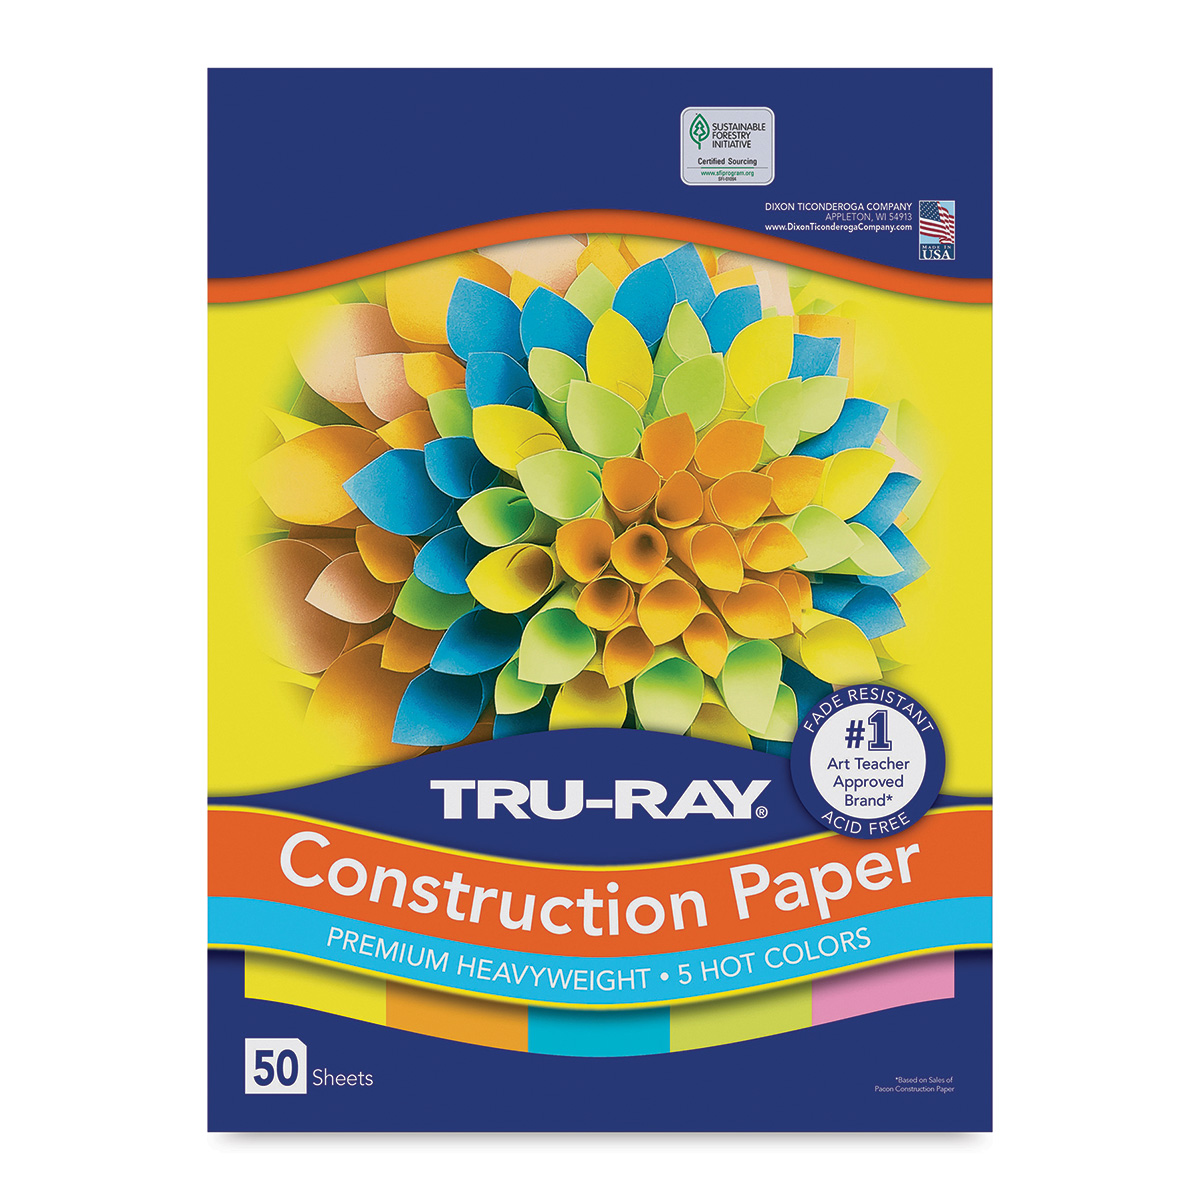 Tru-Ray Premium Construction Paper, Black & White, 12 x 18, 72 sheets Per  Pack, 3 Packs